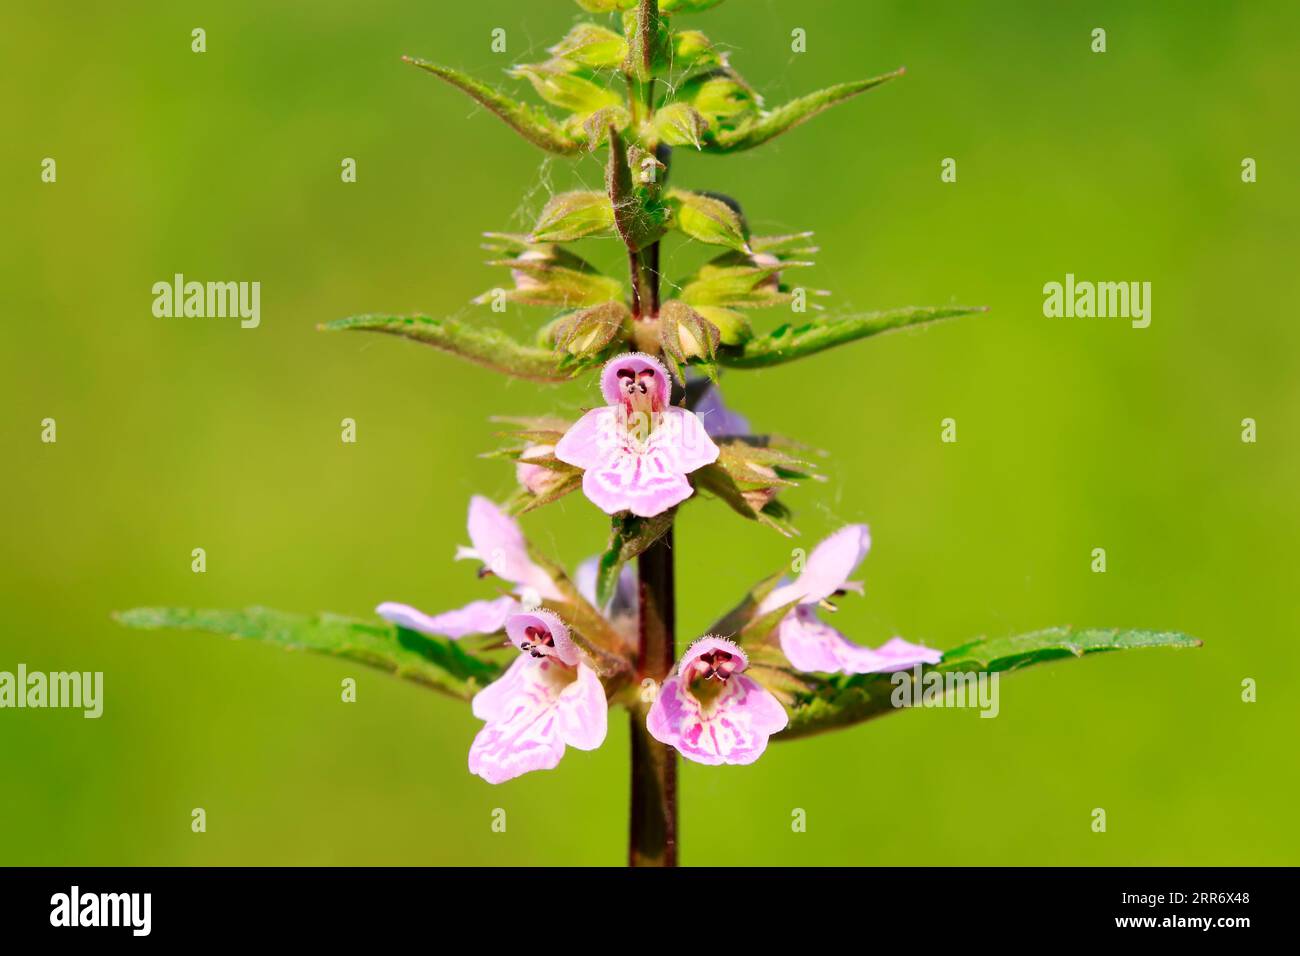 Leonurus artemisia on plant in the wild Stock Photo